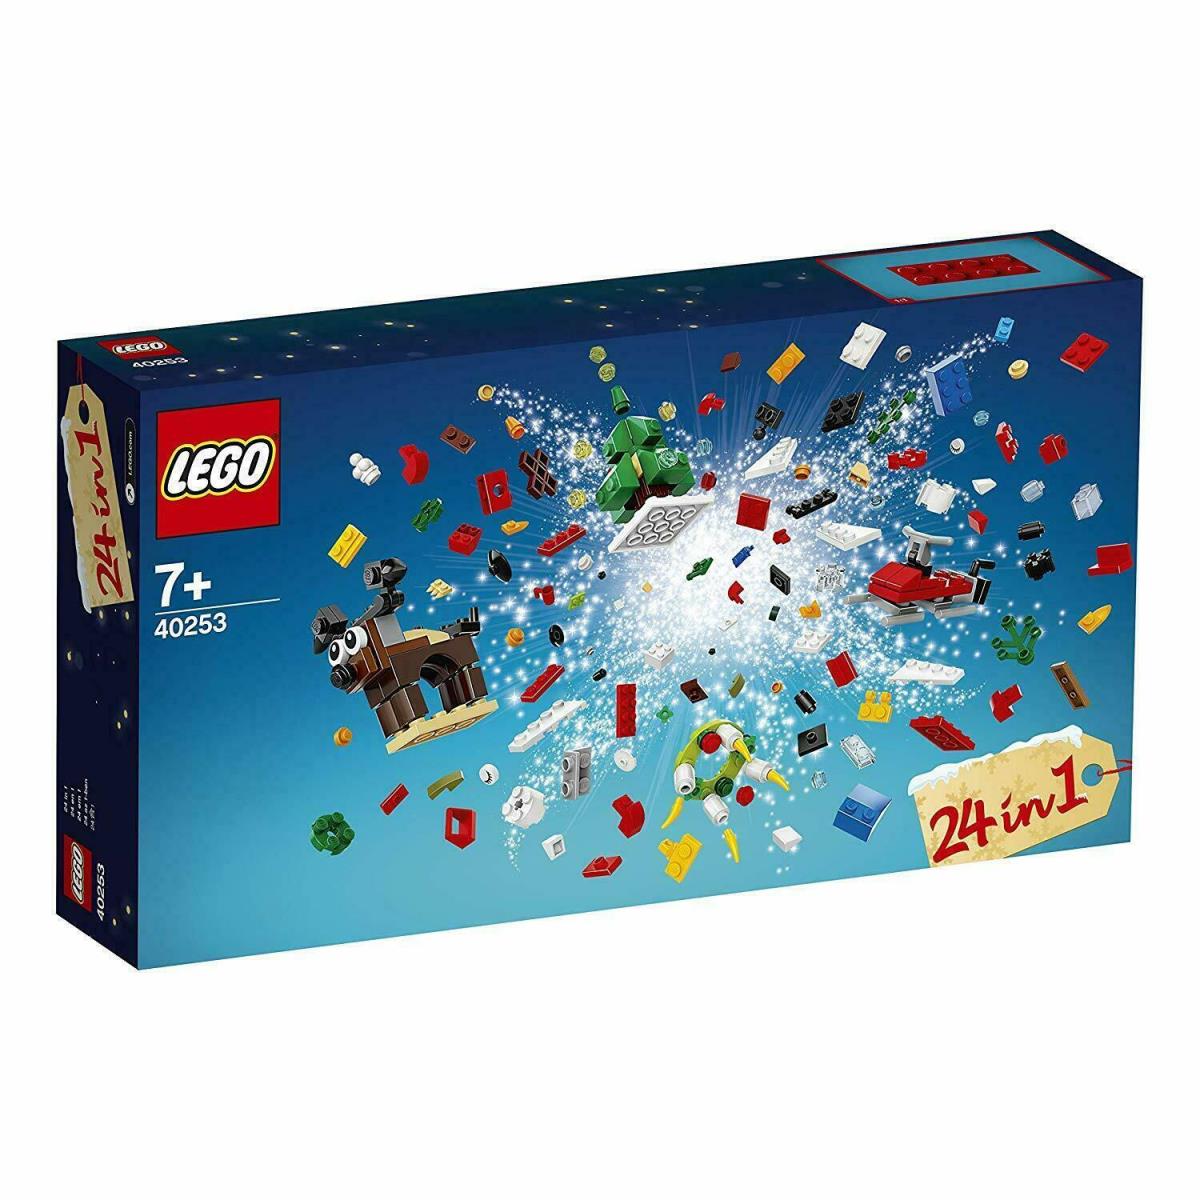 24 in 1 Lego Seasonal Christmas Gift Kid Boy Girl Build Toy Set 40253 254pc